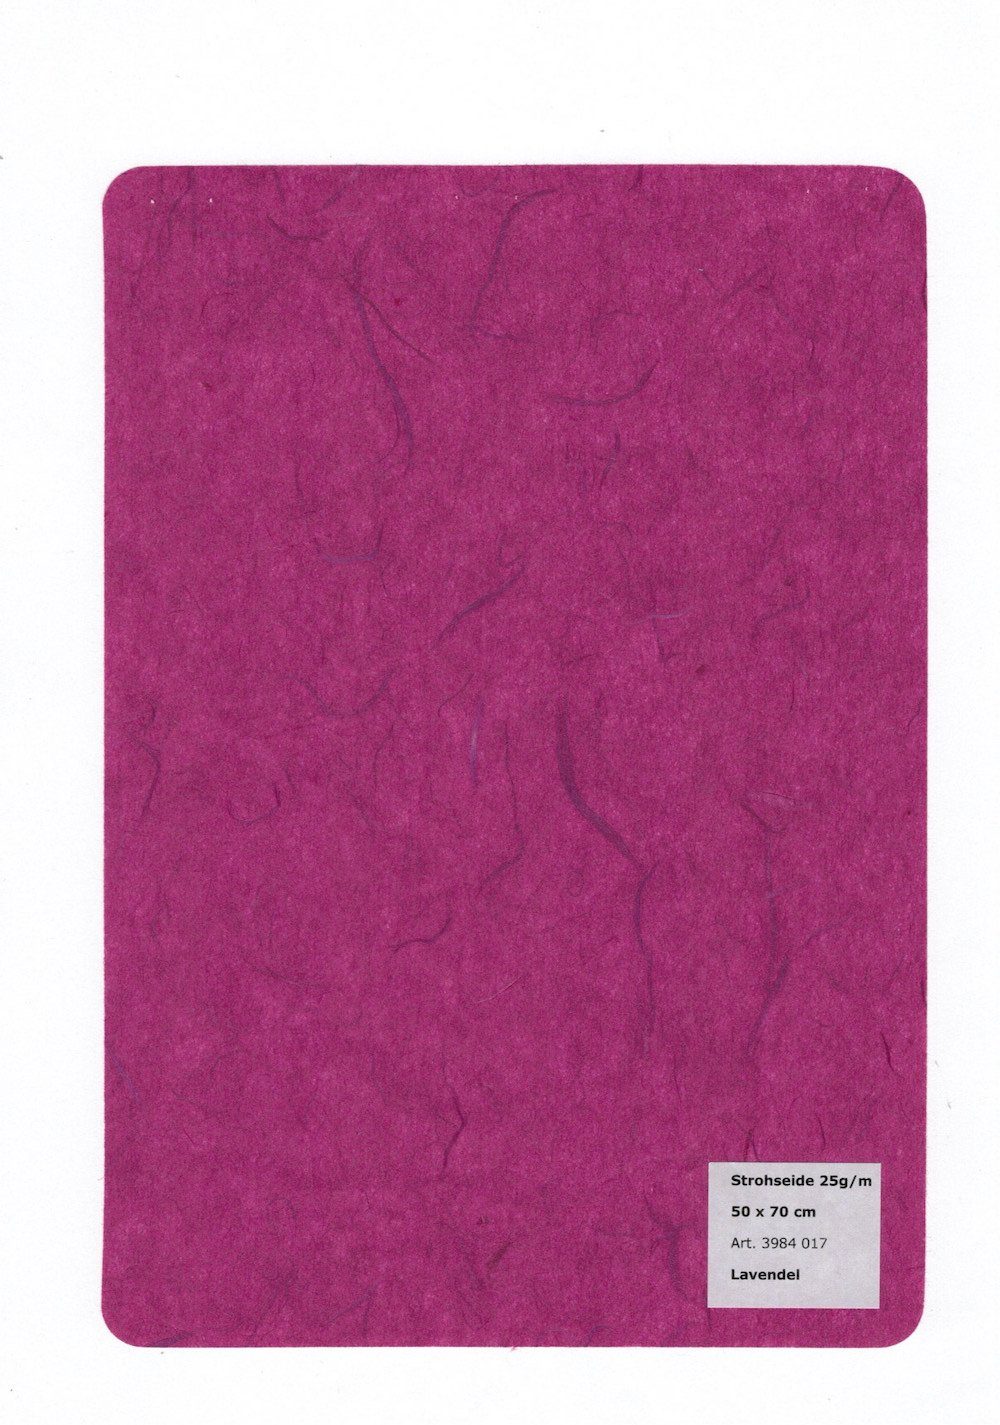 HobbyFun Zeichenpapier STYLO Strohseide 25 g/m² 50x70cm, 1 Bogen Lavendel | 